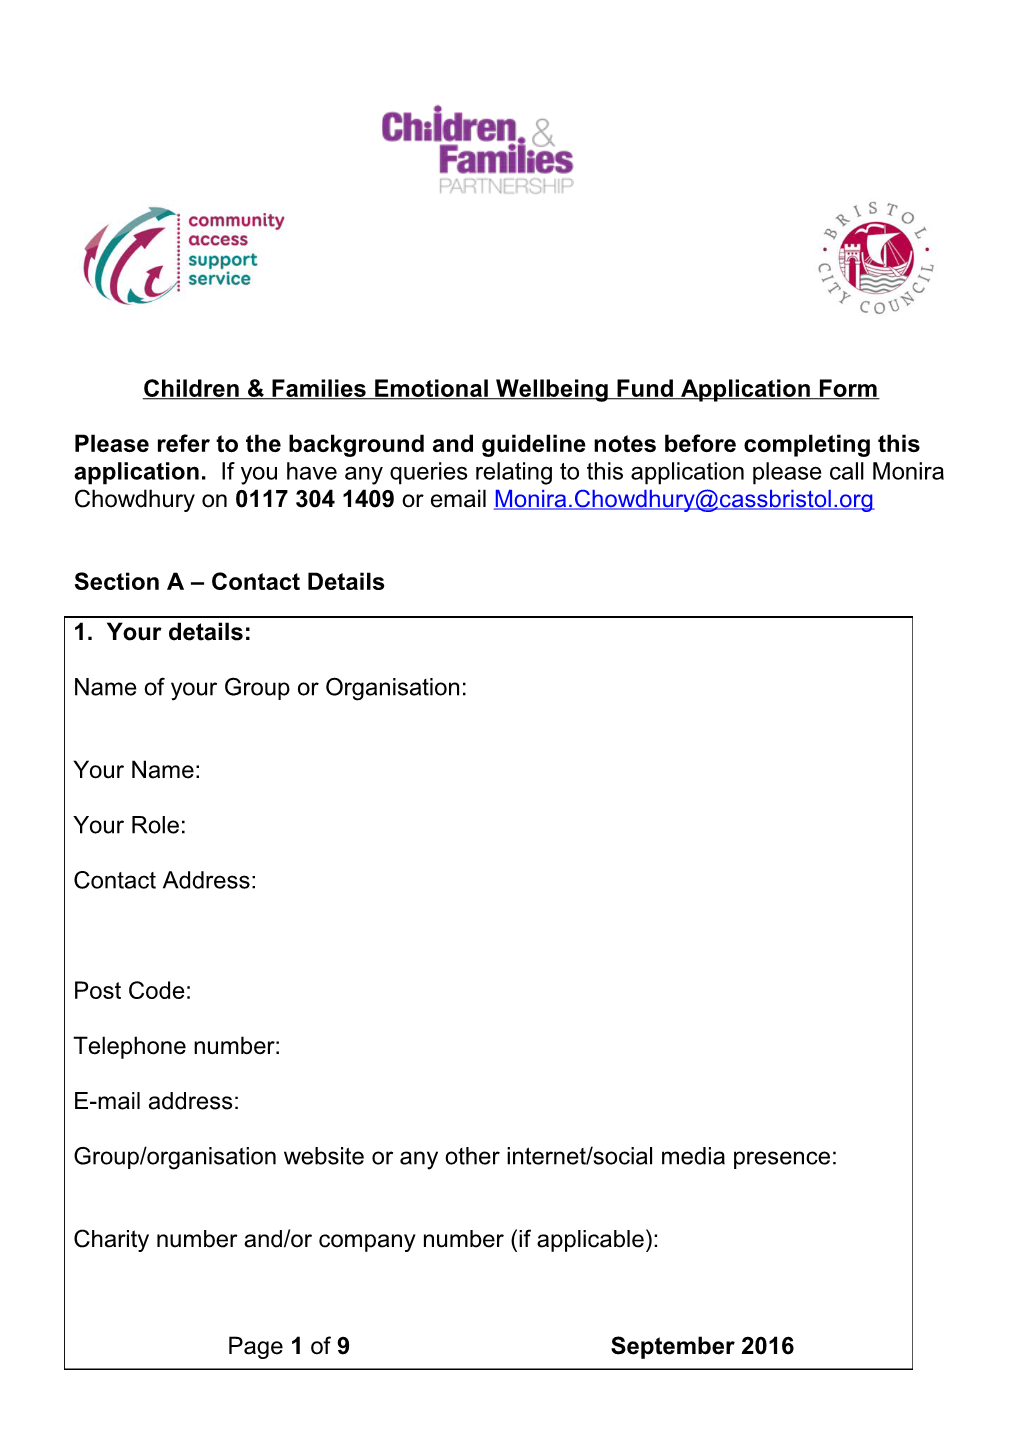 Children & Families Emotional Wellbeing Fund Application Form